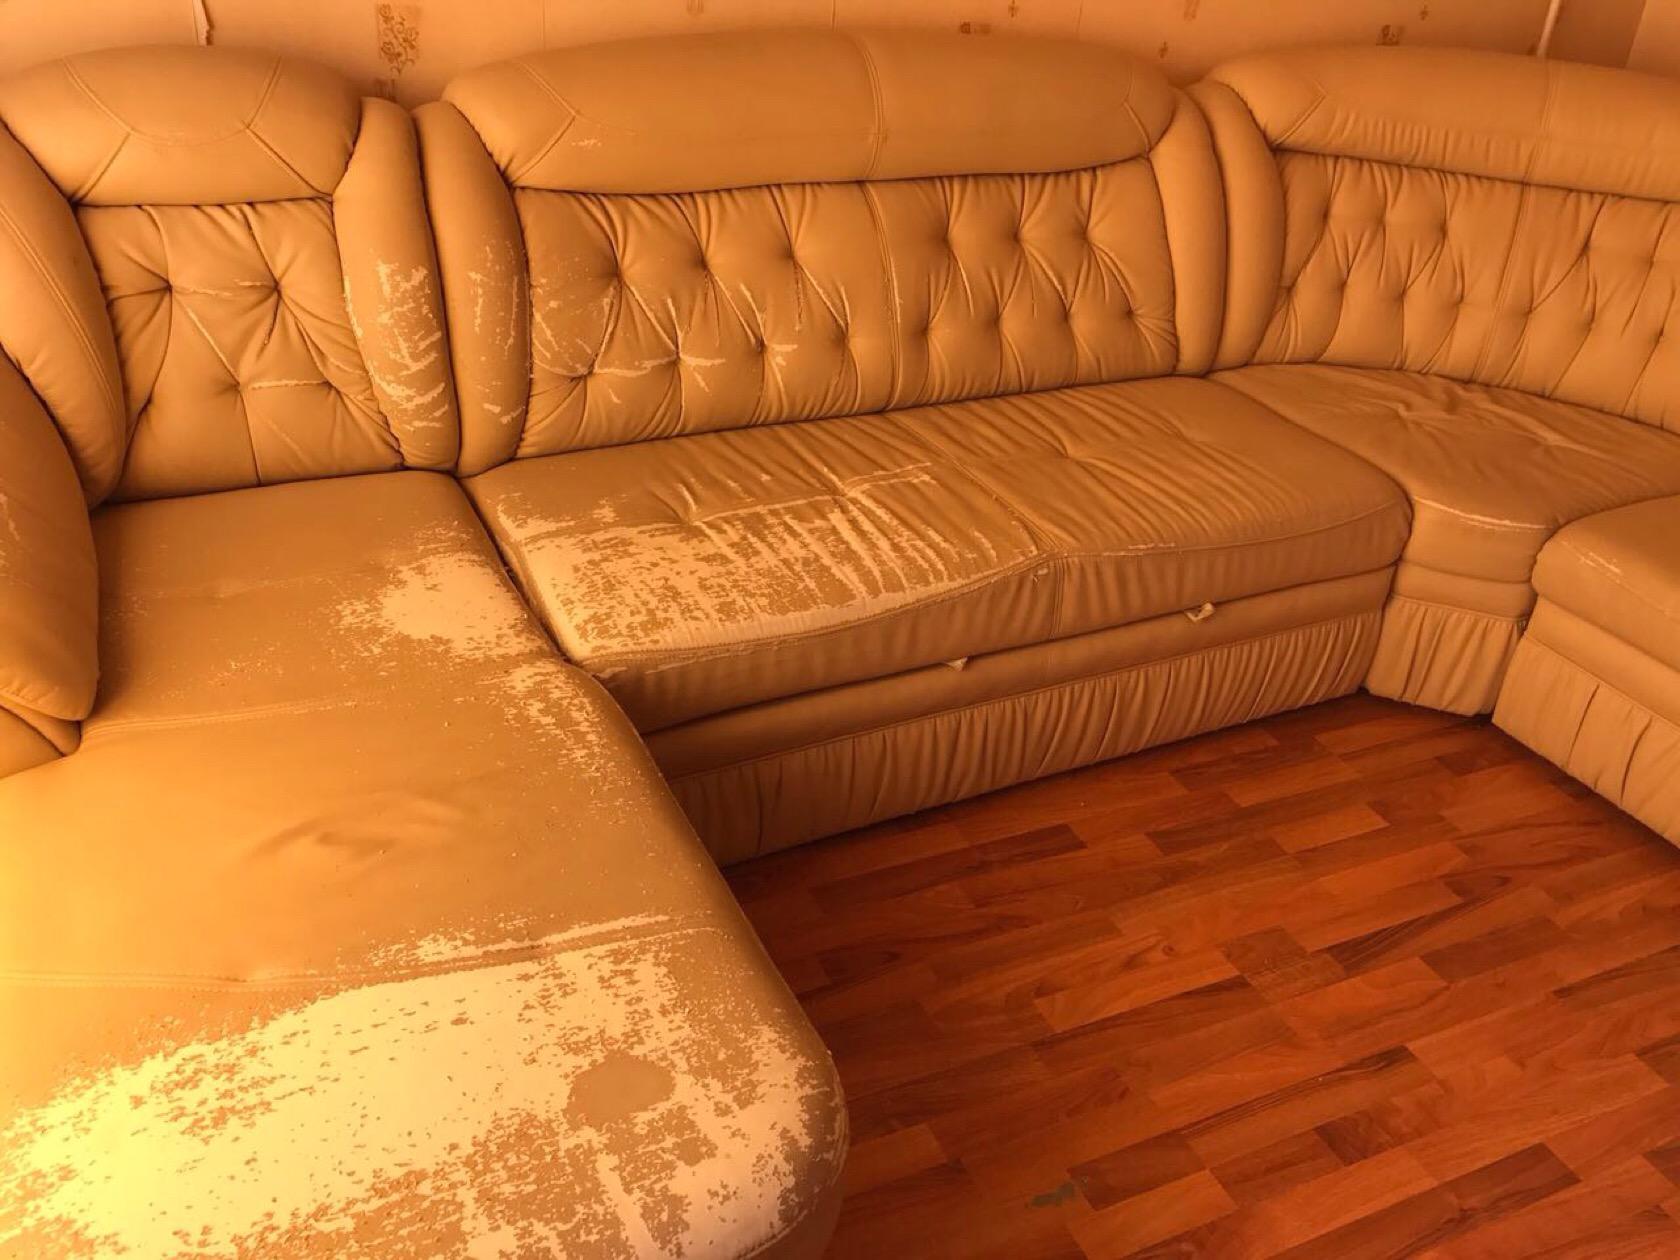 Обивка мягкой мебели Санкт Петербург. Обивка дивана. Перетяжка углового дивана в бежево кремовом цвете. Перетяжка мягкого кухонного уголка на кухне. Ремонт мягкой мебели спб